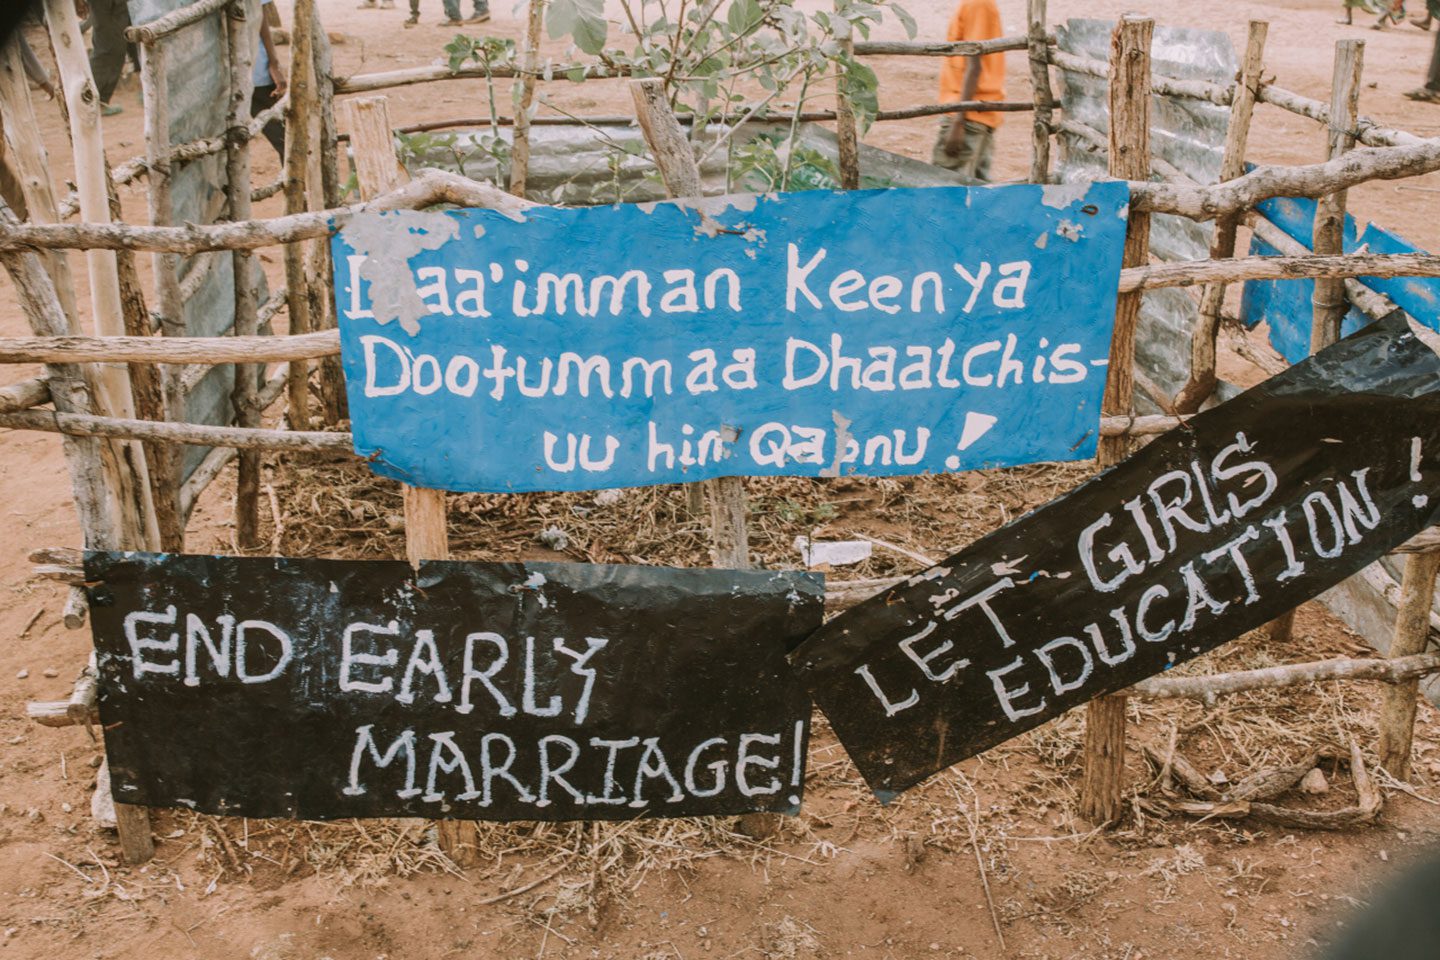 Signs in Gobele, Ethiopia